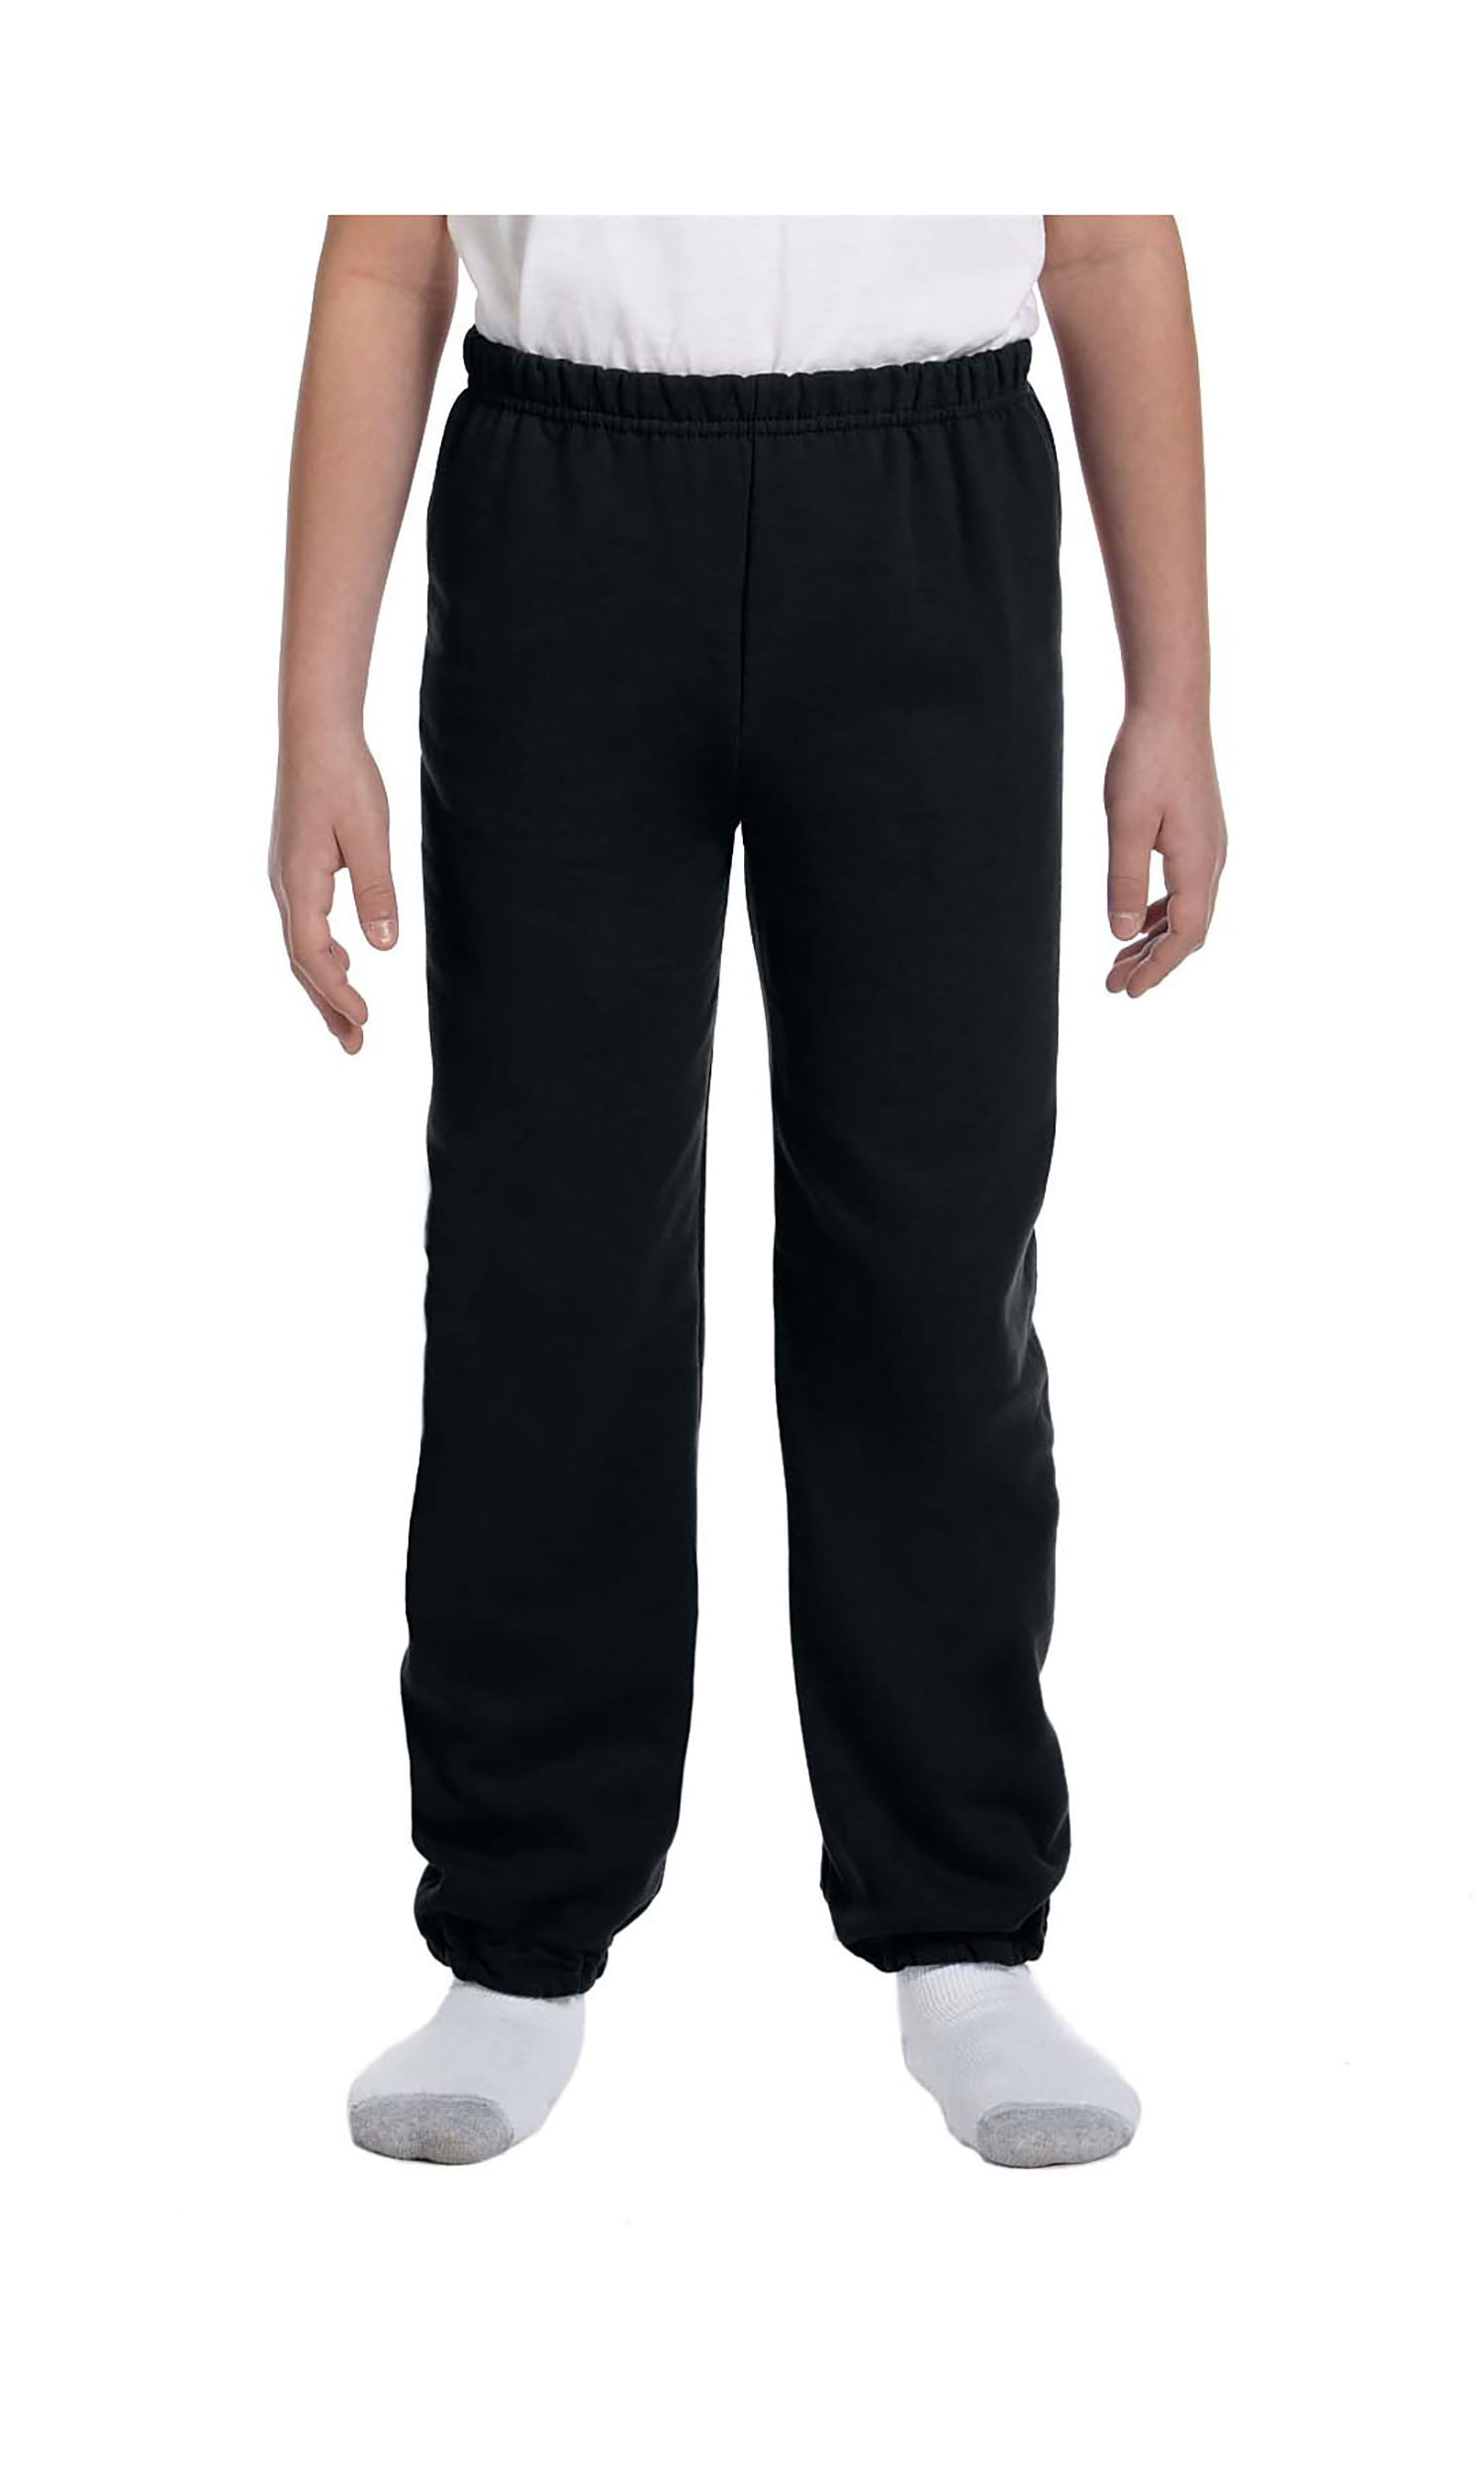 Style G18200B Gildan Youth Elastic Bottom Sweatpants 